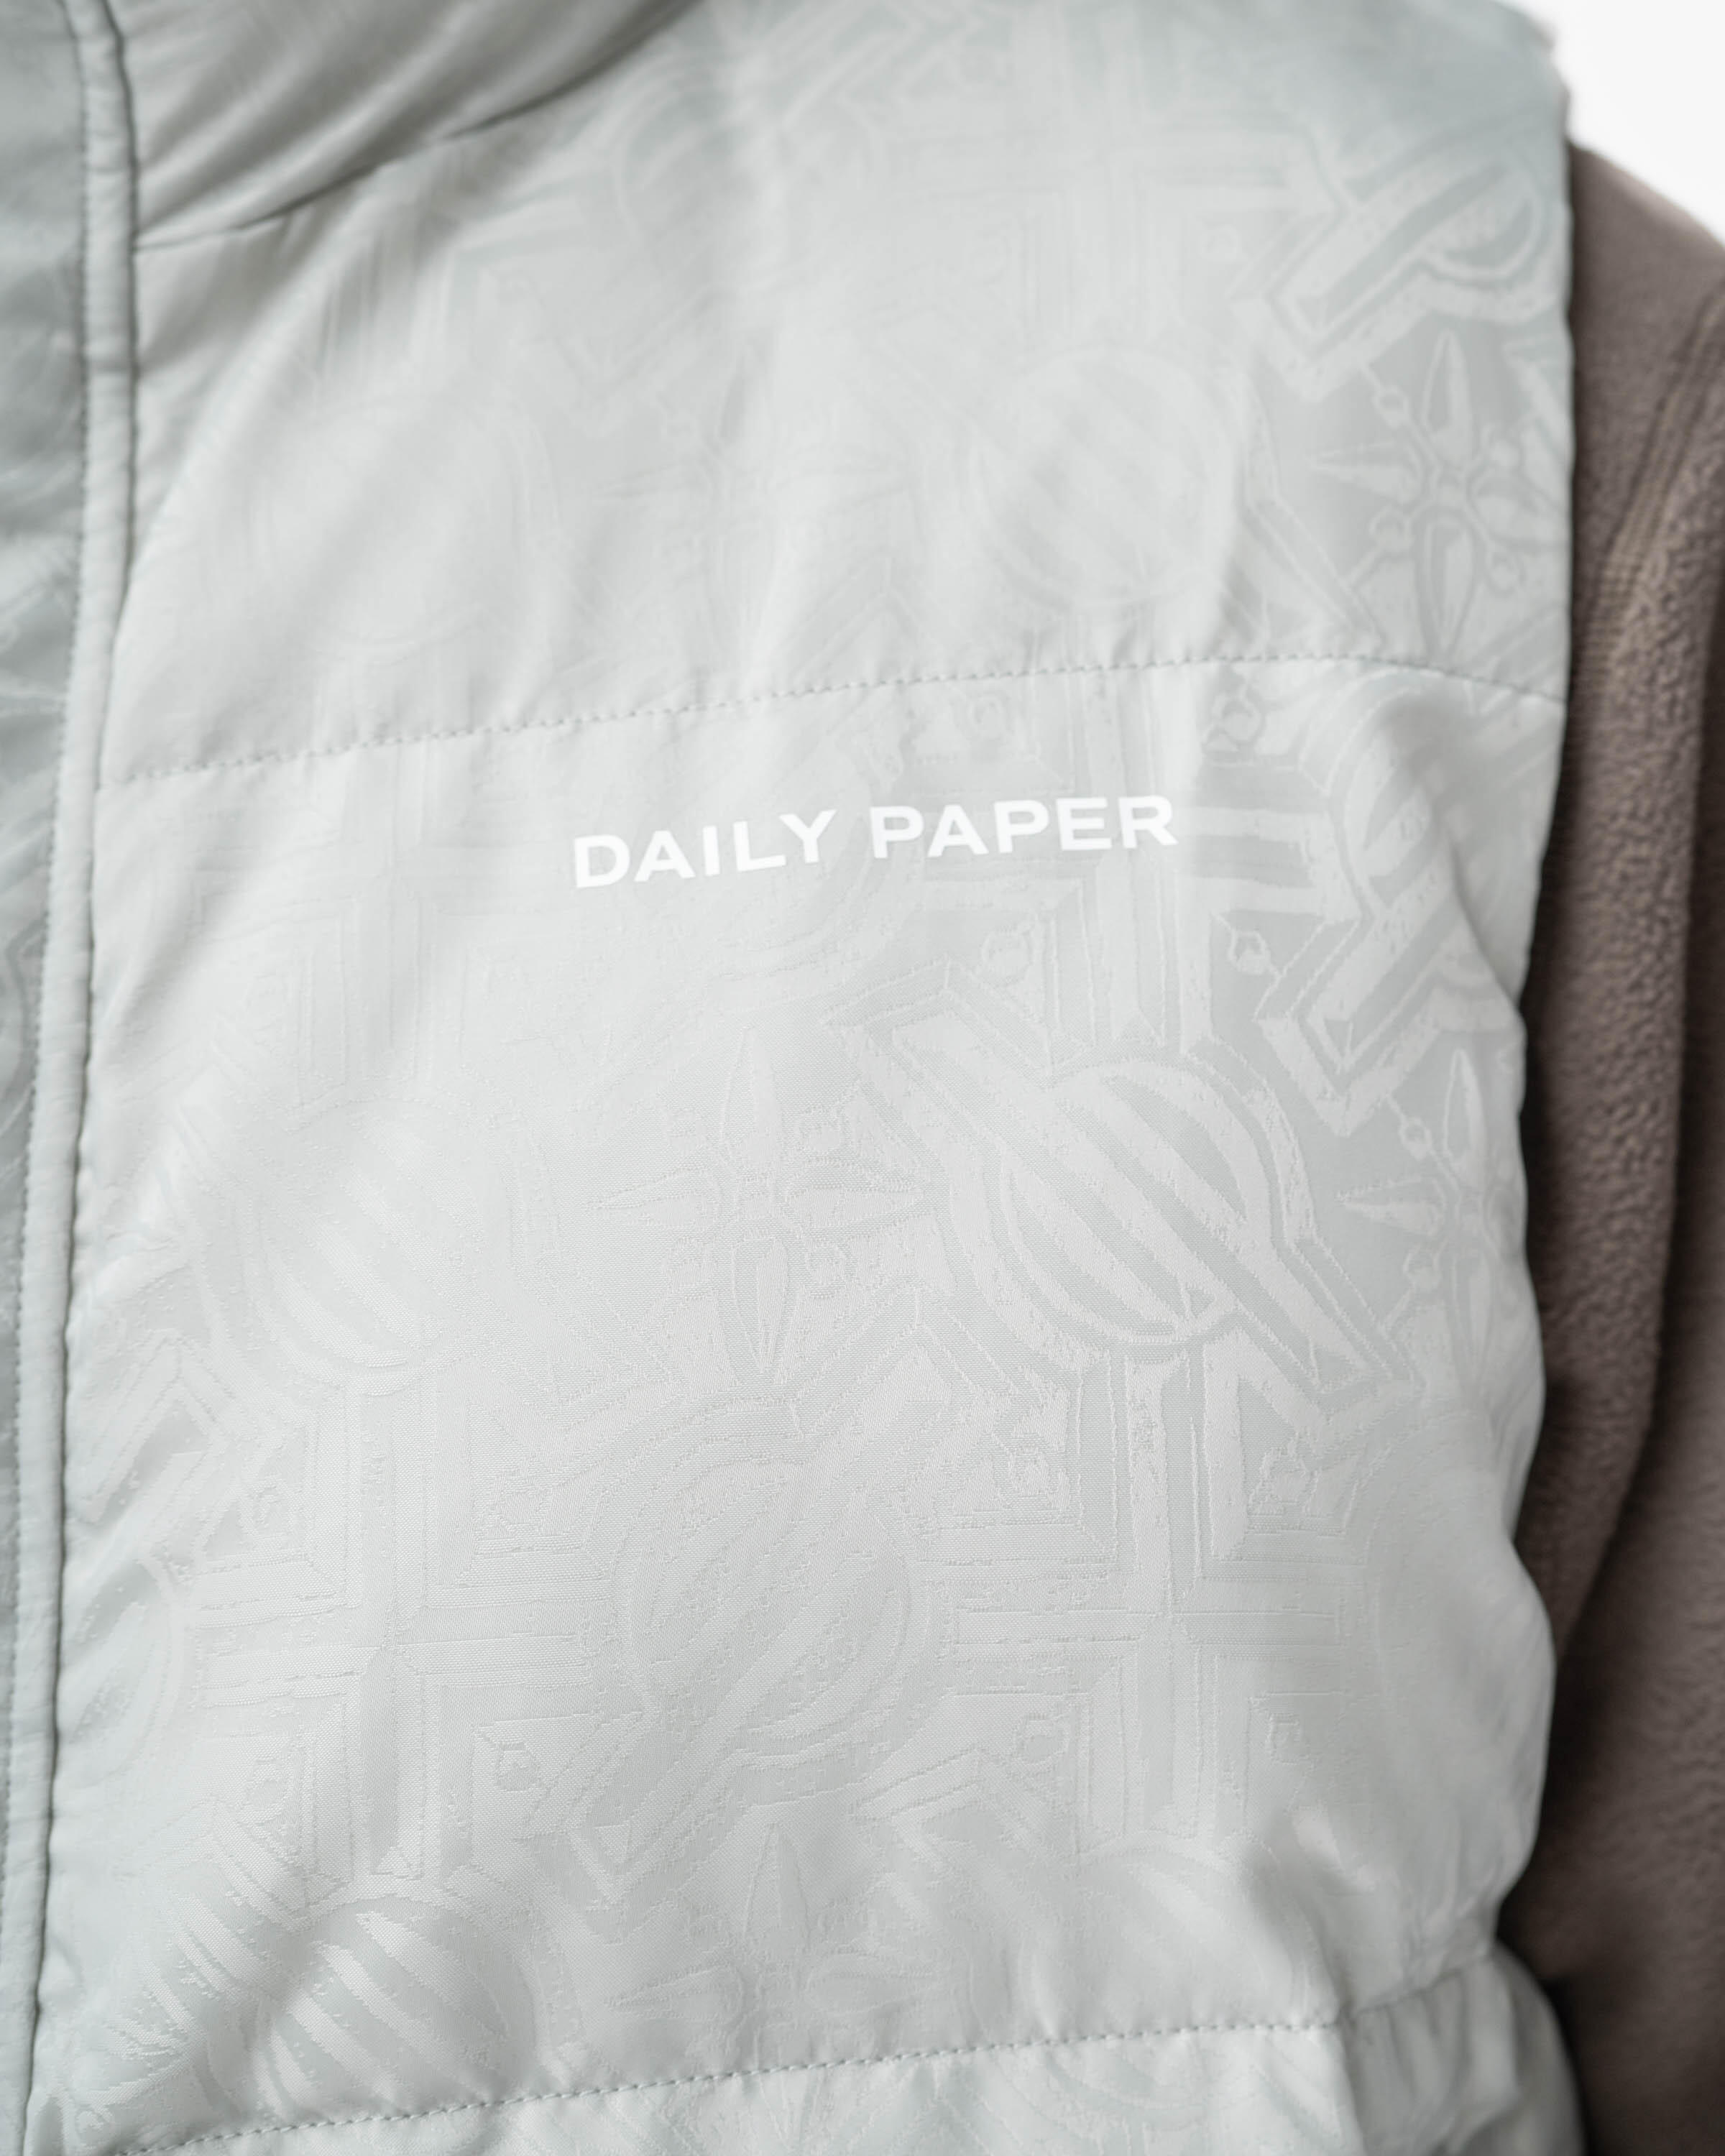 Daily Paper riyo vest